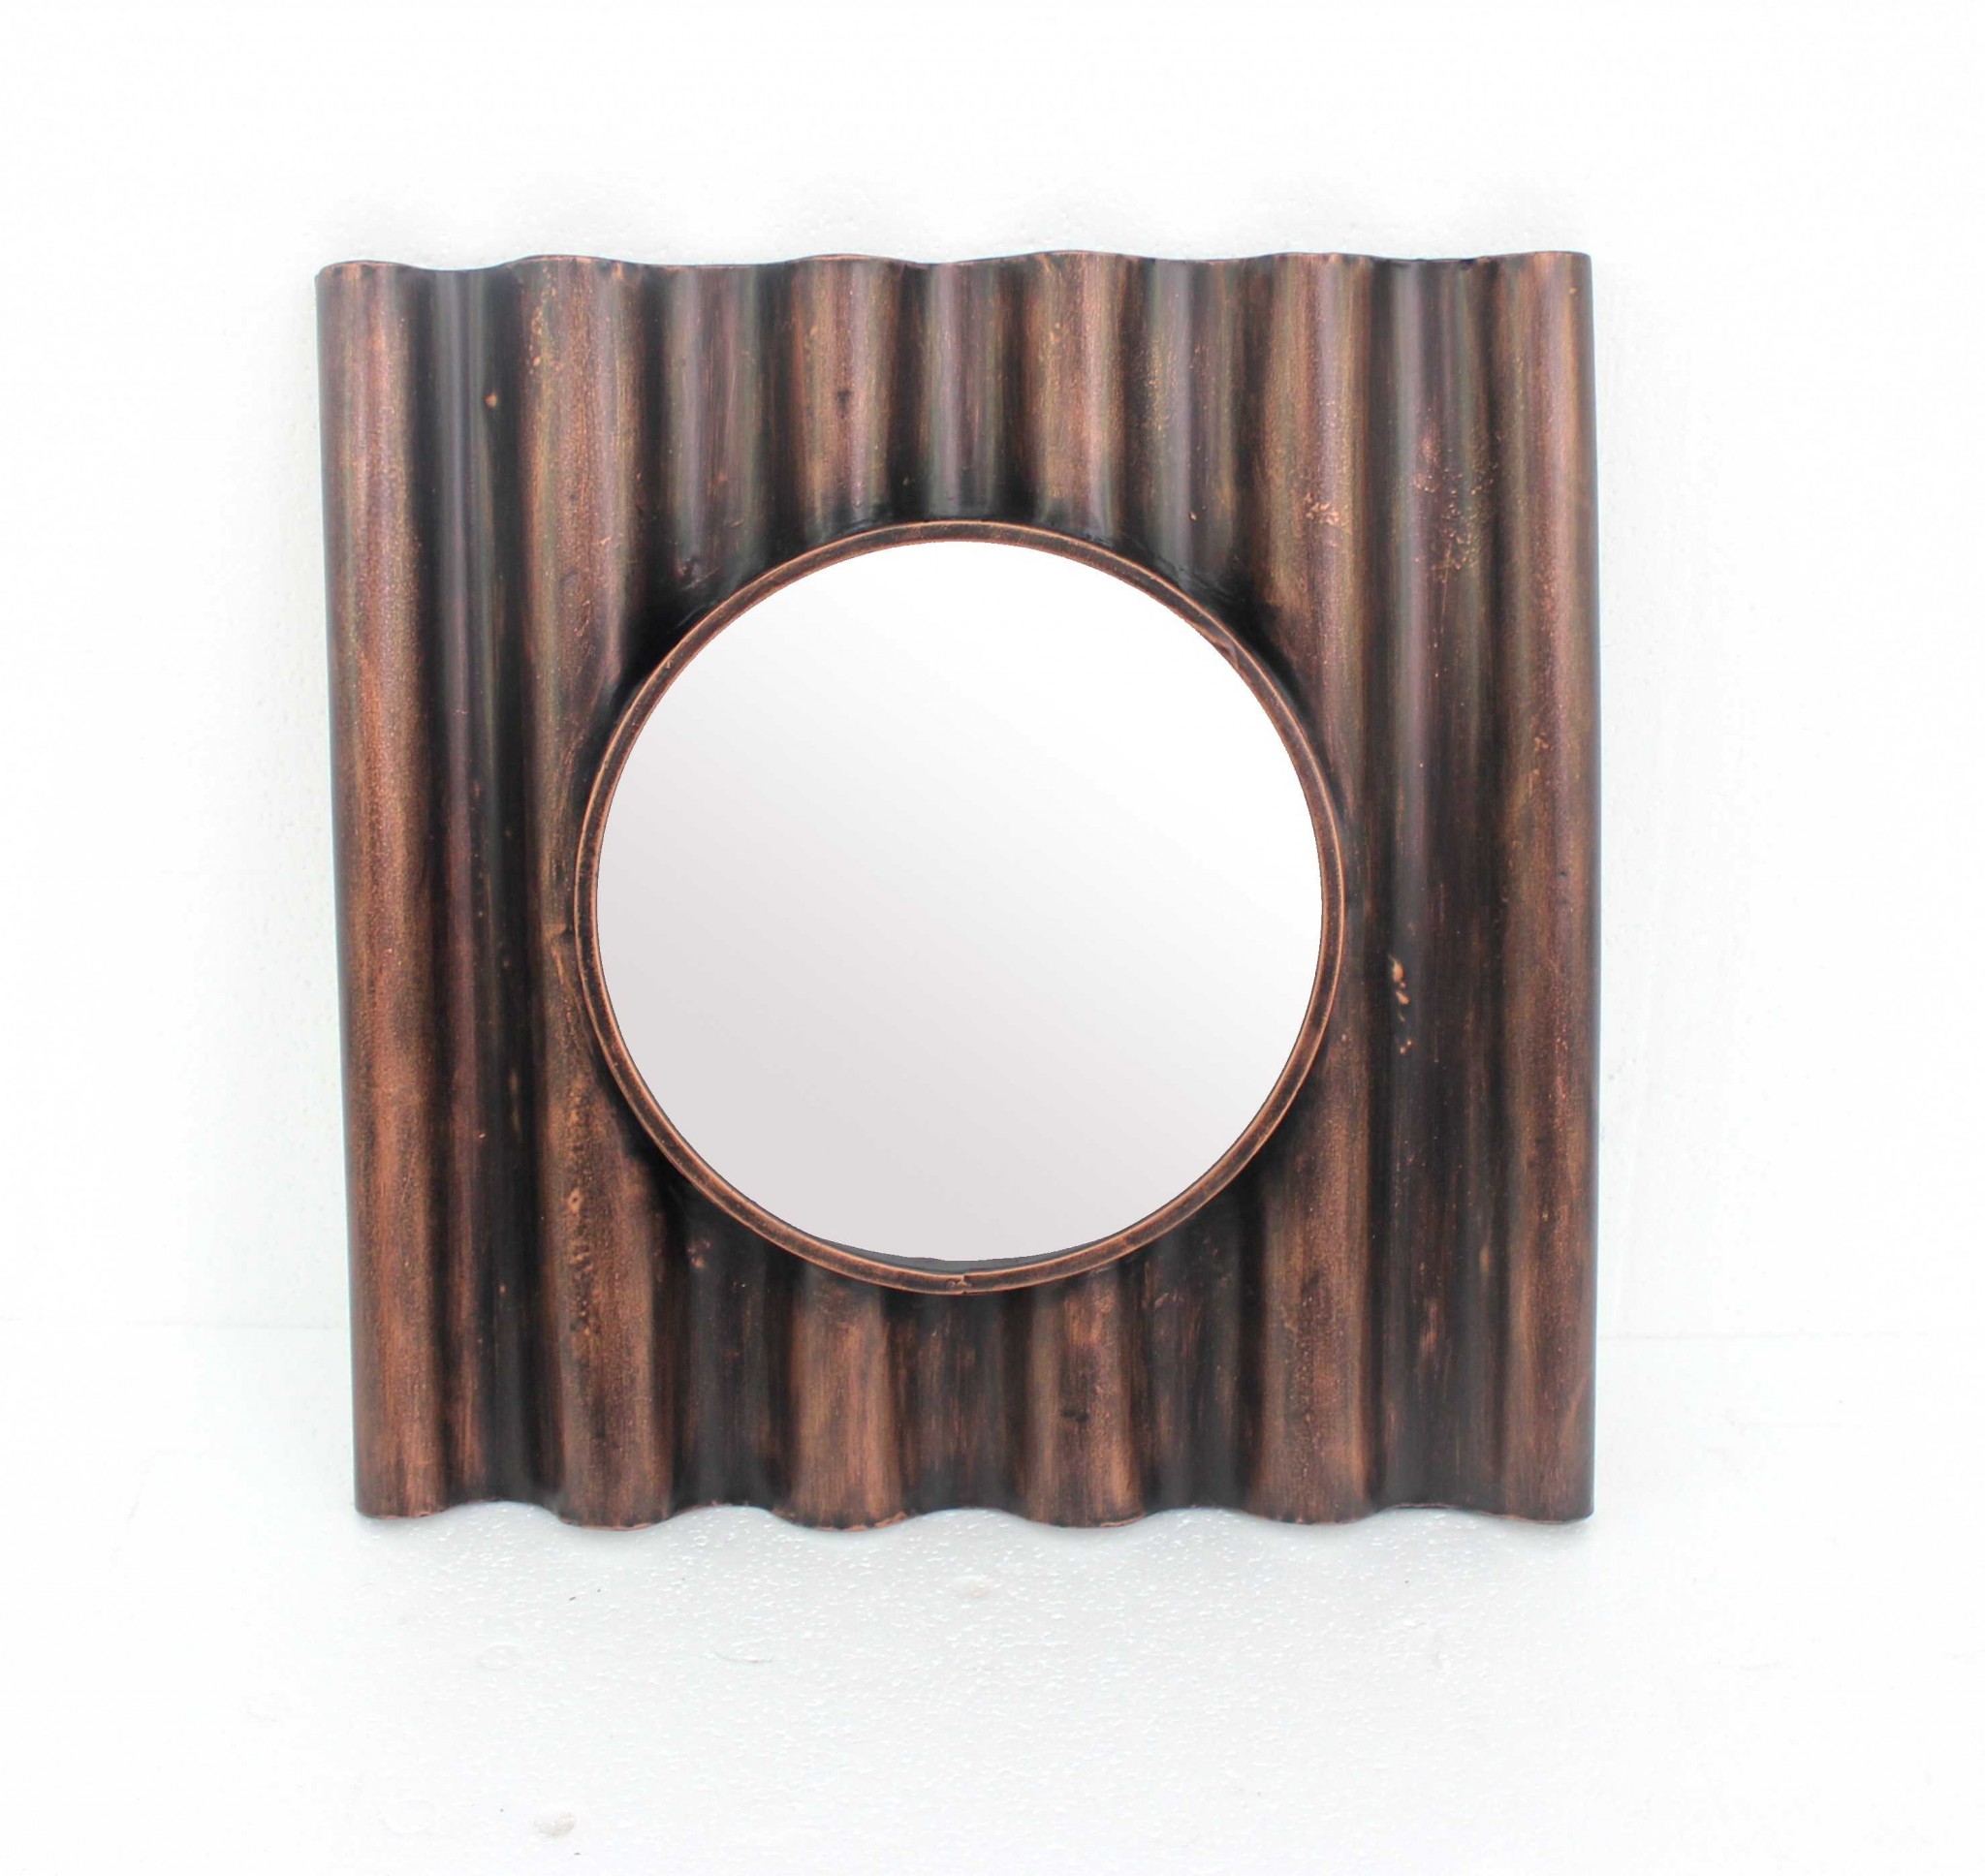 24" x 24" x 3" Bronze, Panpipe-Like, Wooden Cosmetic - Mirror